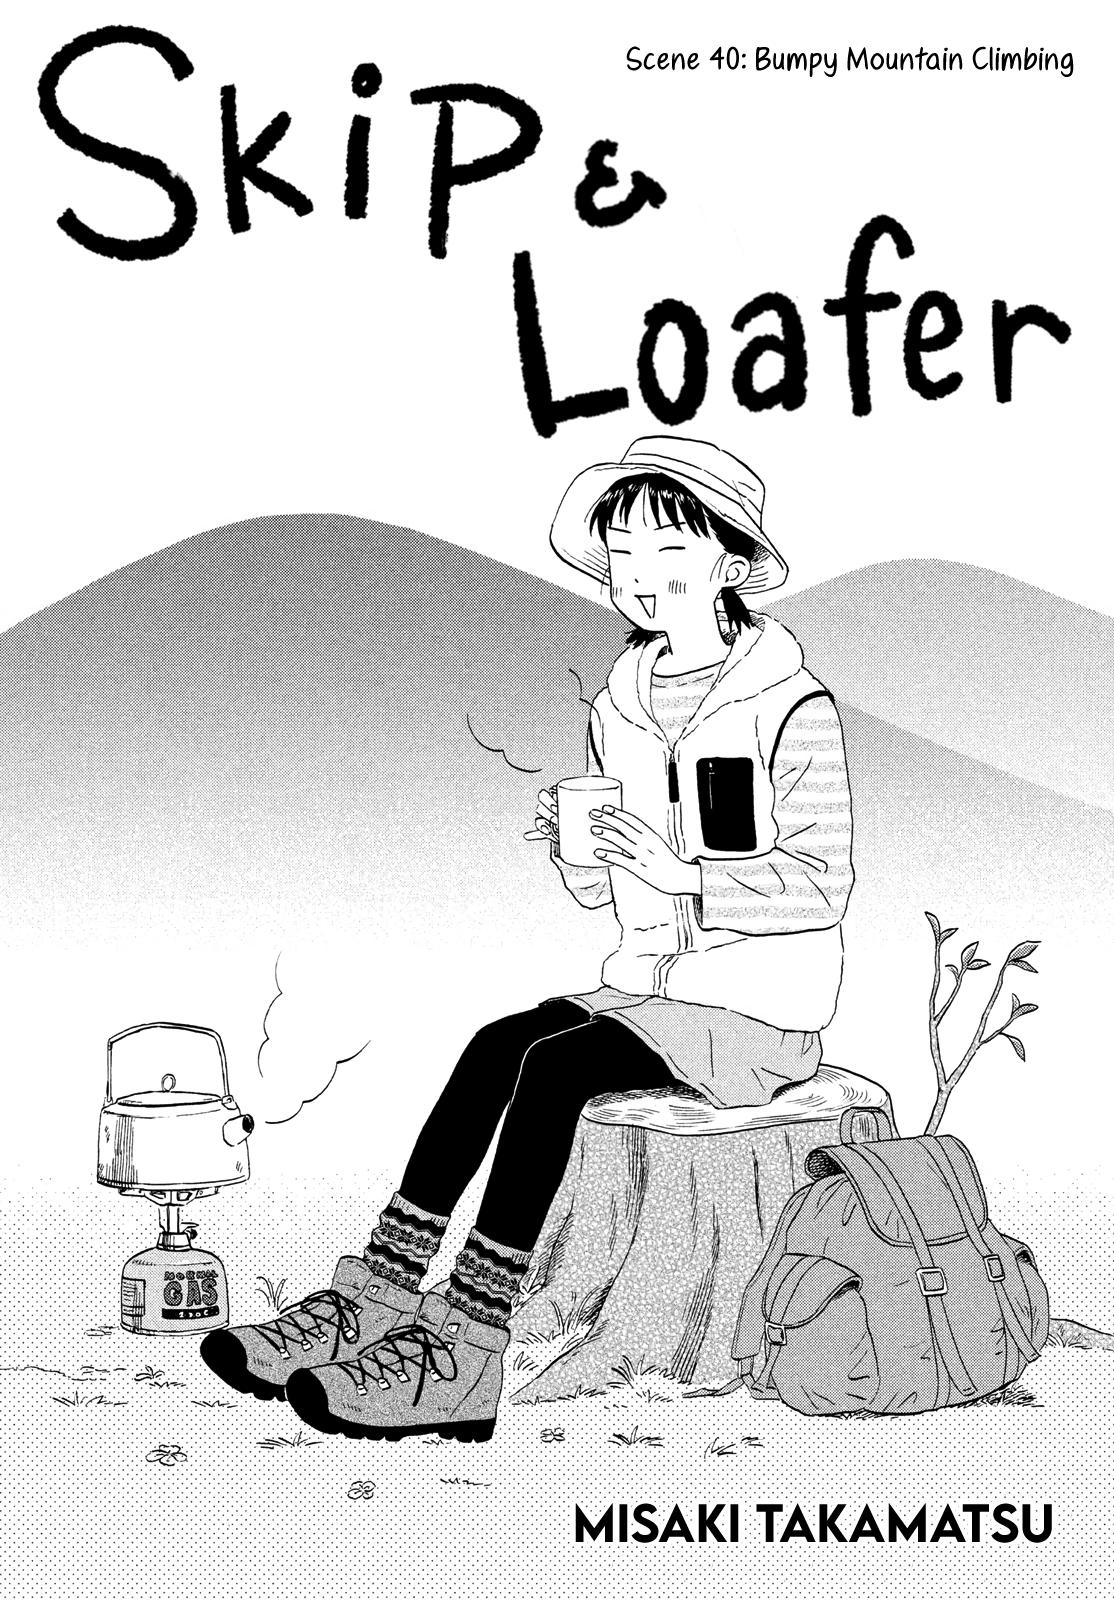 Read Skip To Loafer Chapter 41: Fluffy Spring on Mangakakalot